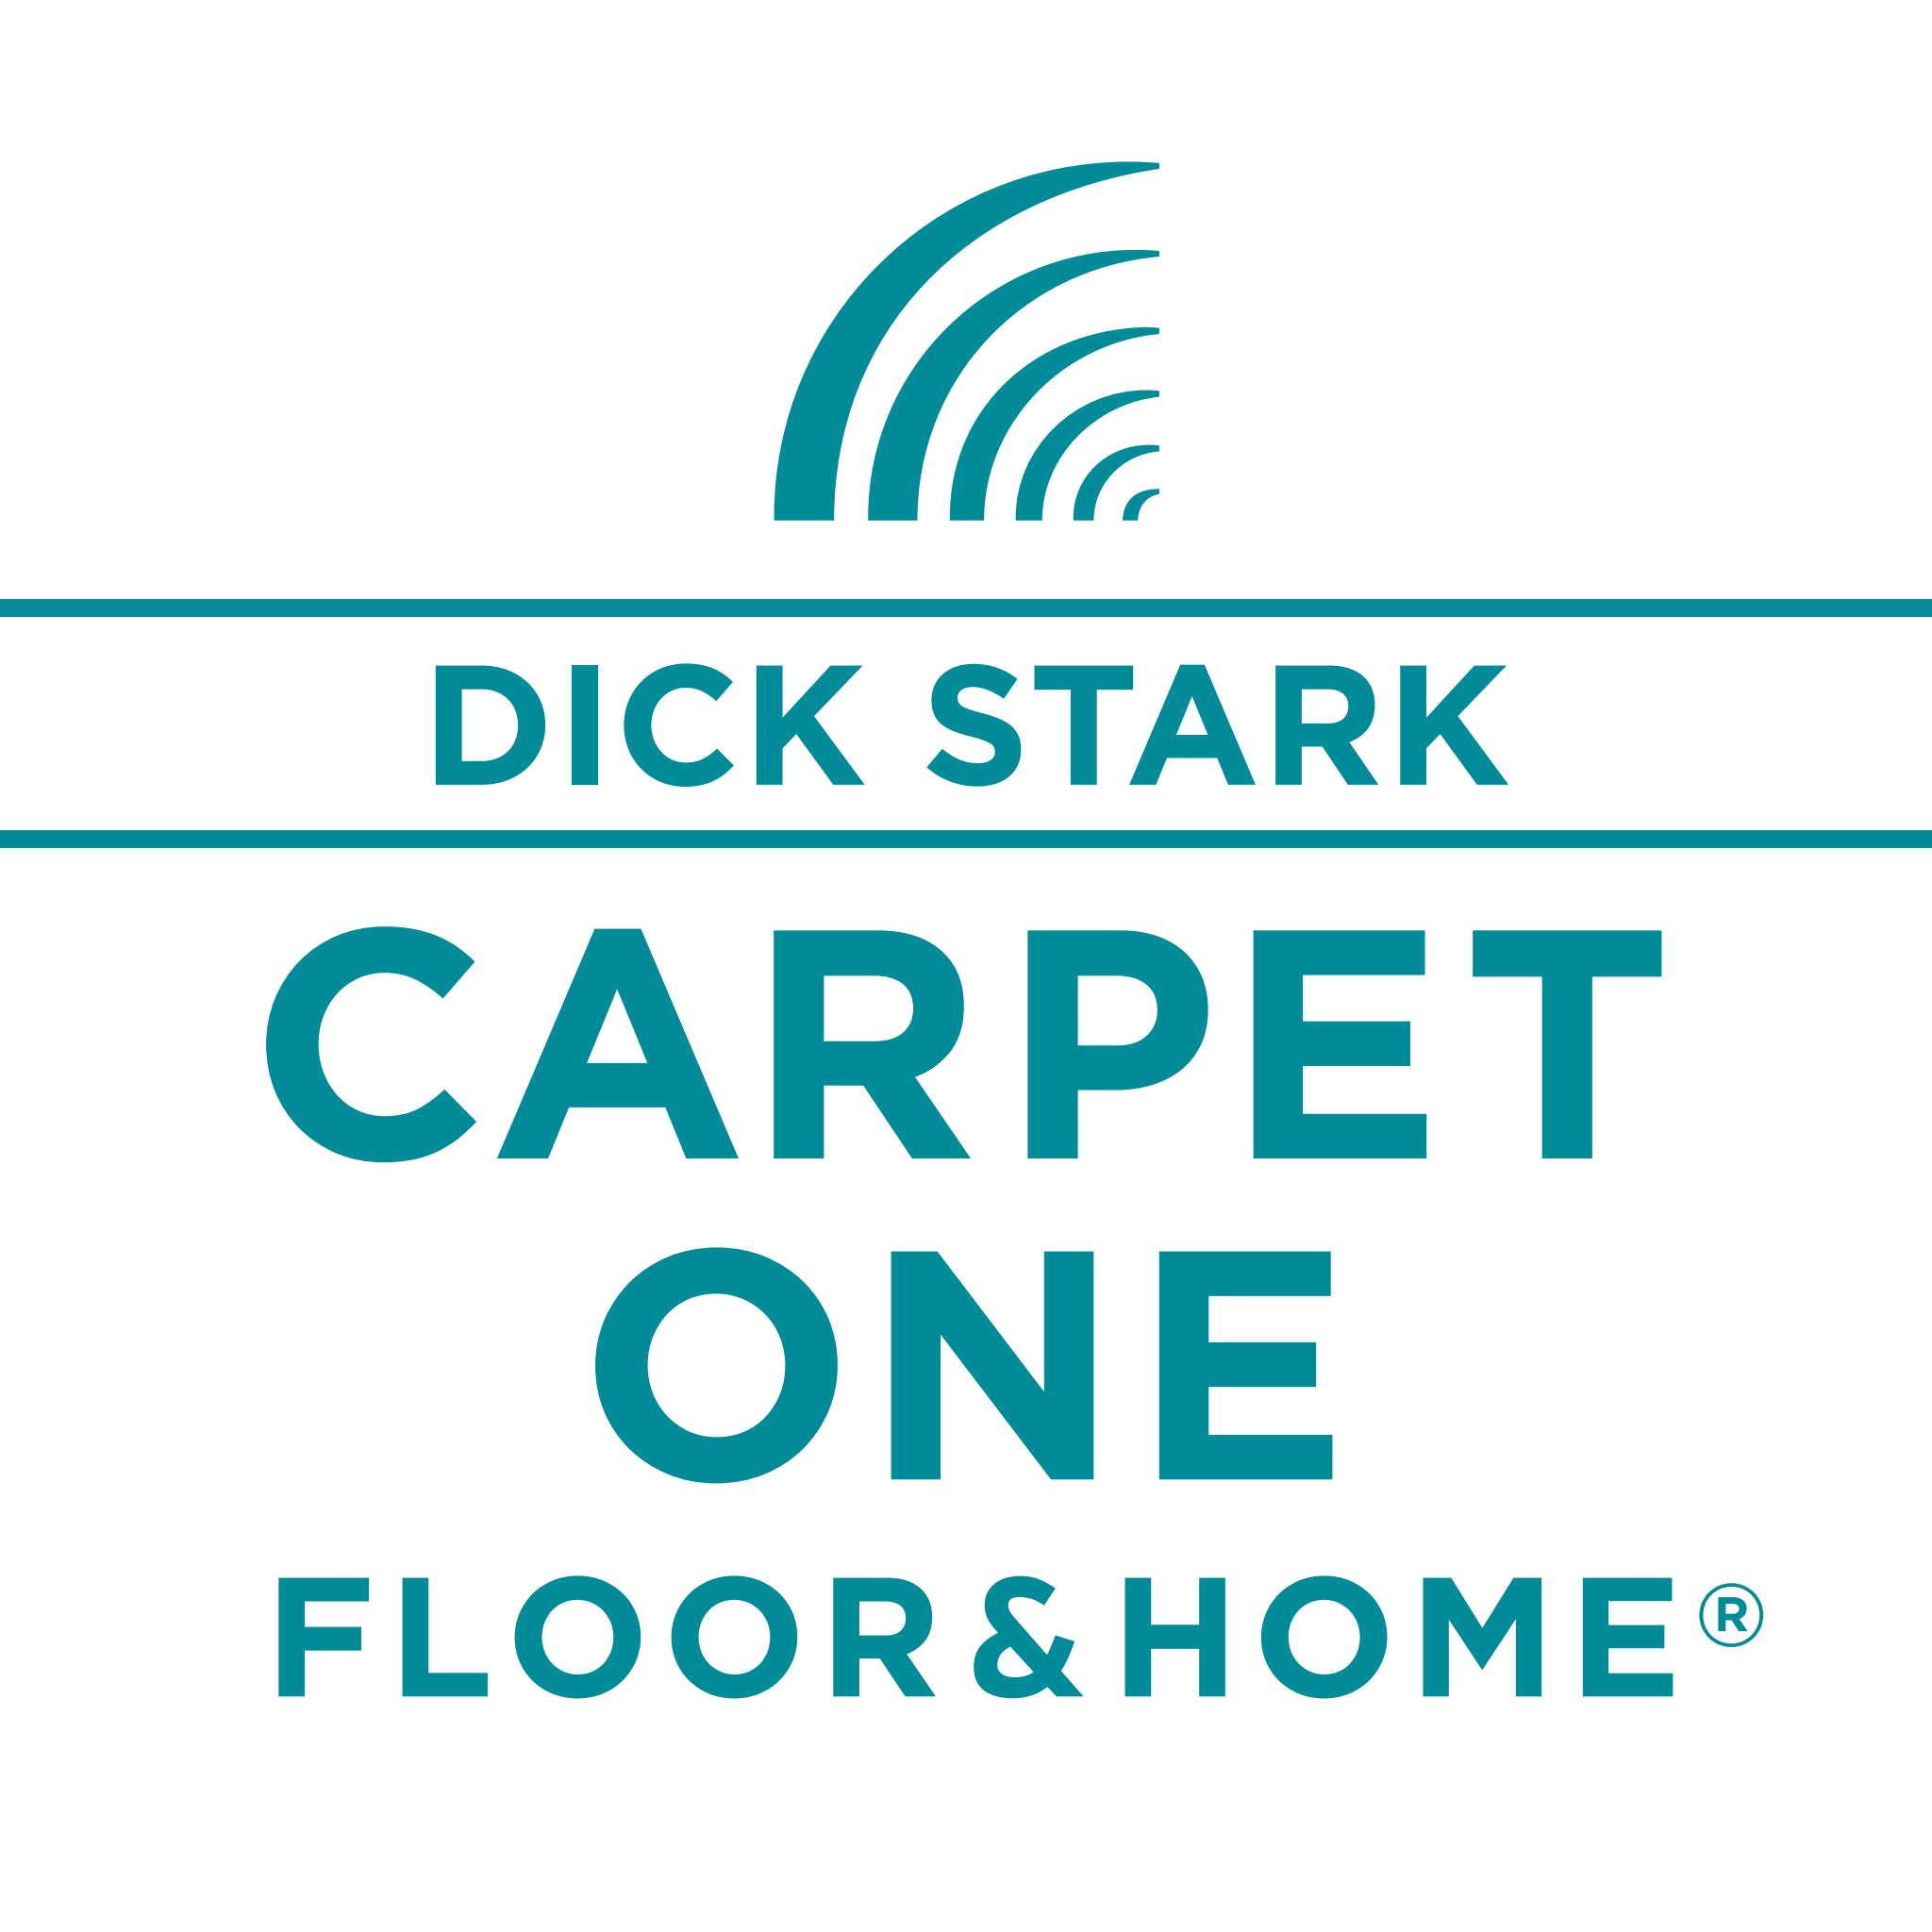 Dick Stark Carpet One